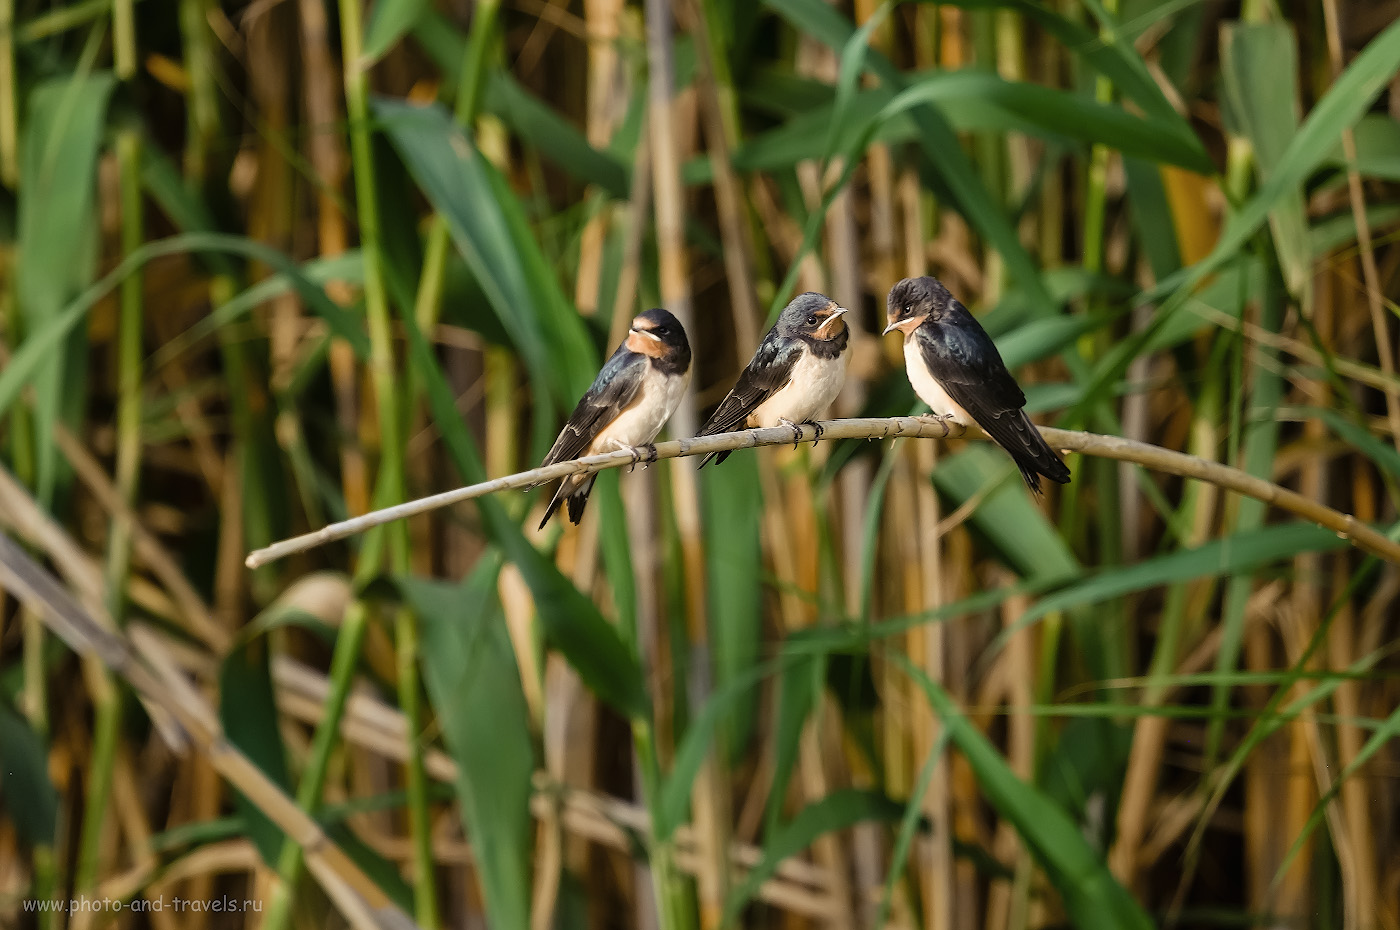 Фото 19. Прогуливаясь по каналу посреди болота, можно наблюдать за жизнью птиц. Слётки стрижей ждут родителей. 1/500, 4.8, 800, 0, 200.